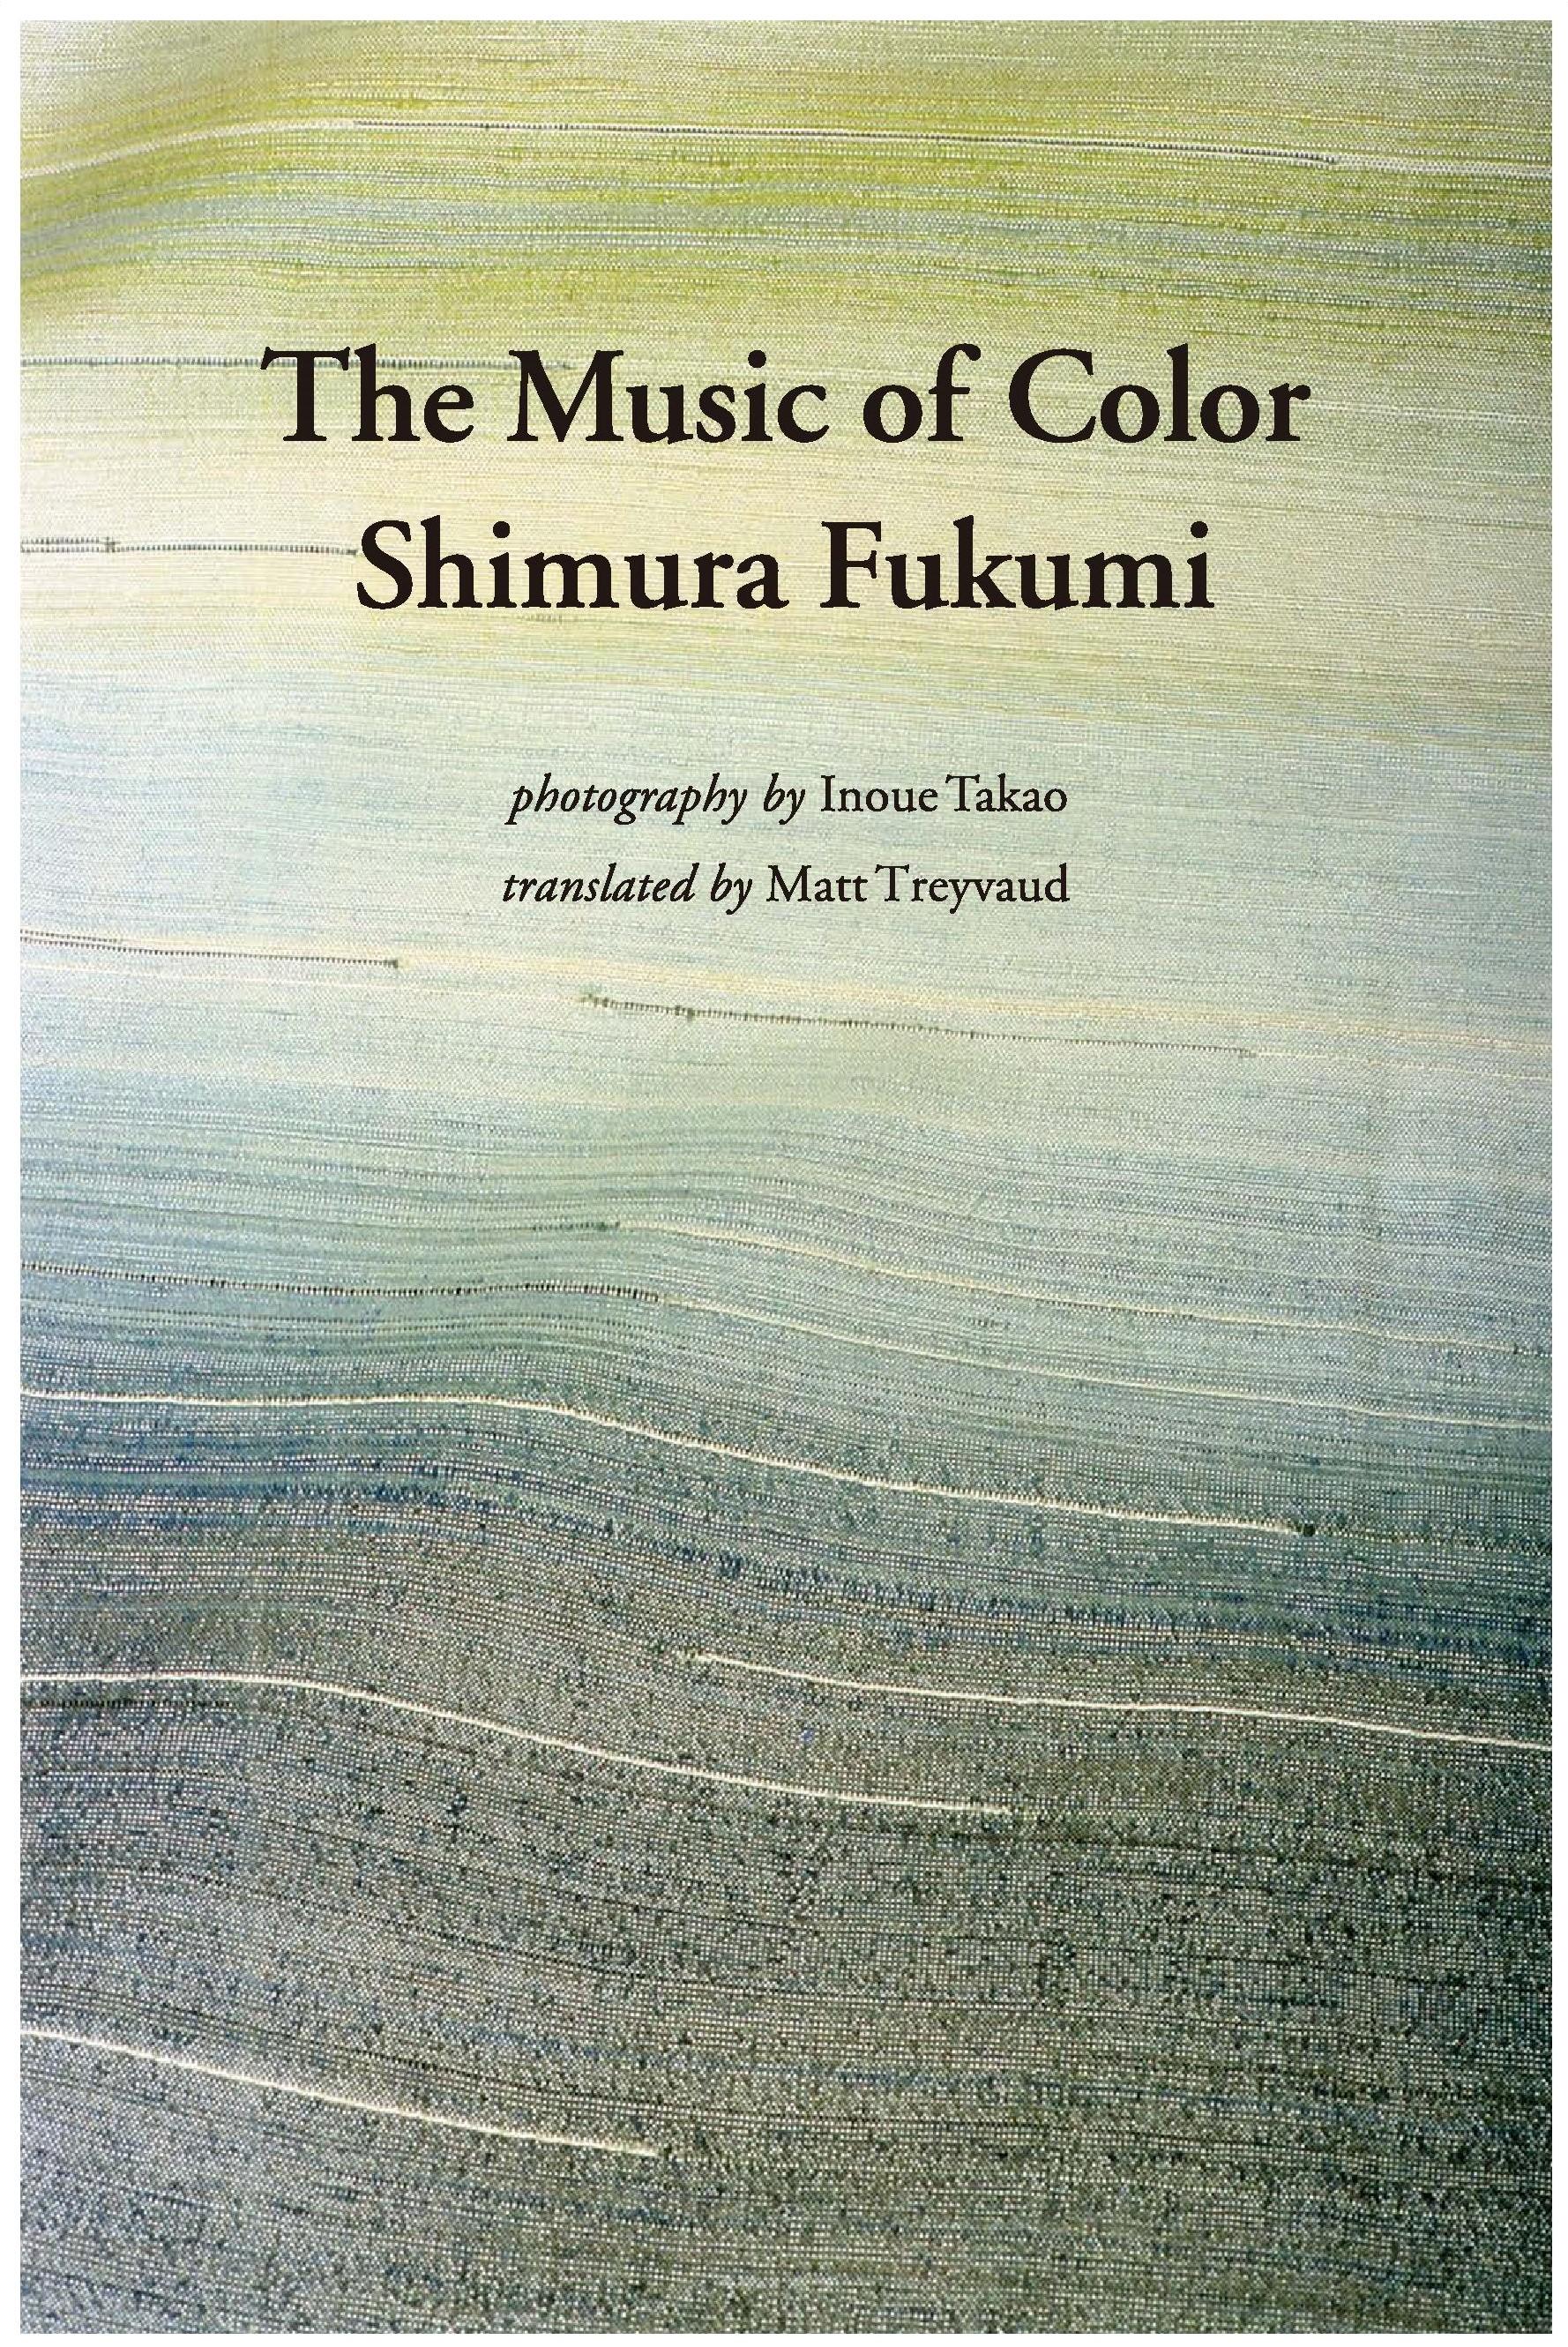 The Book of Urushi | JPIC INTERNATIONAL